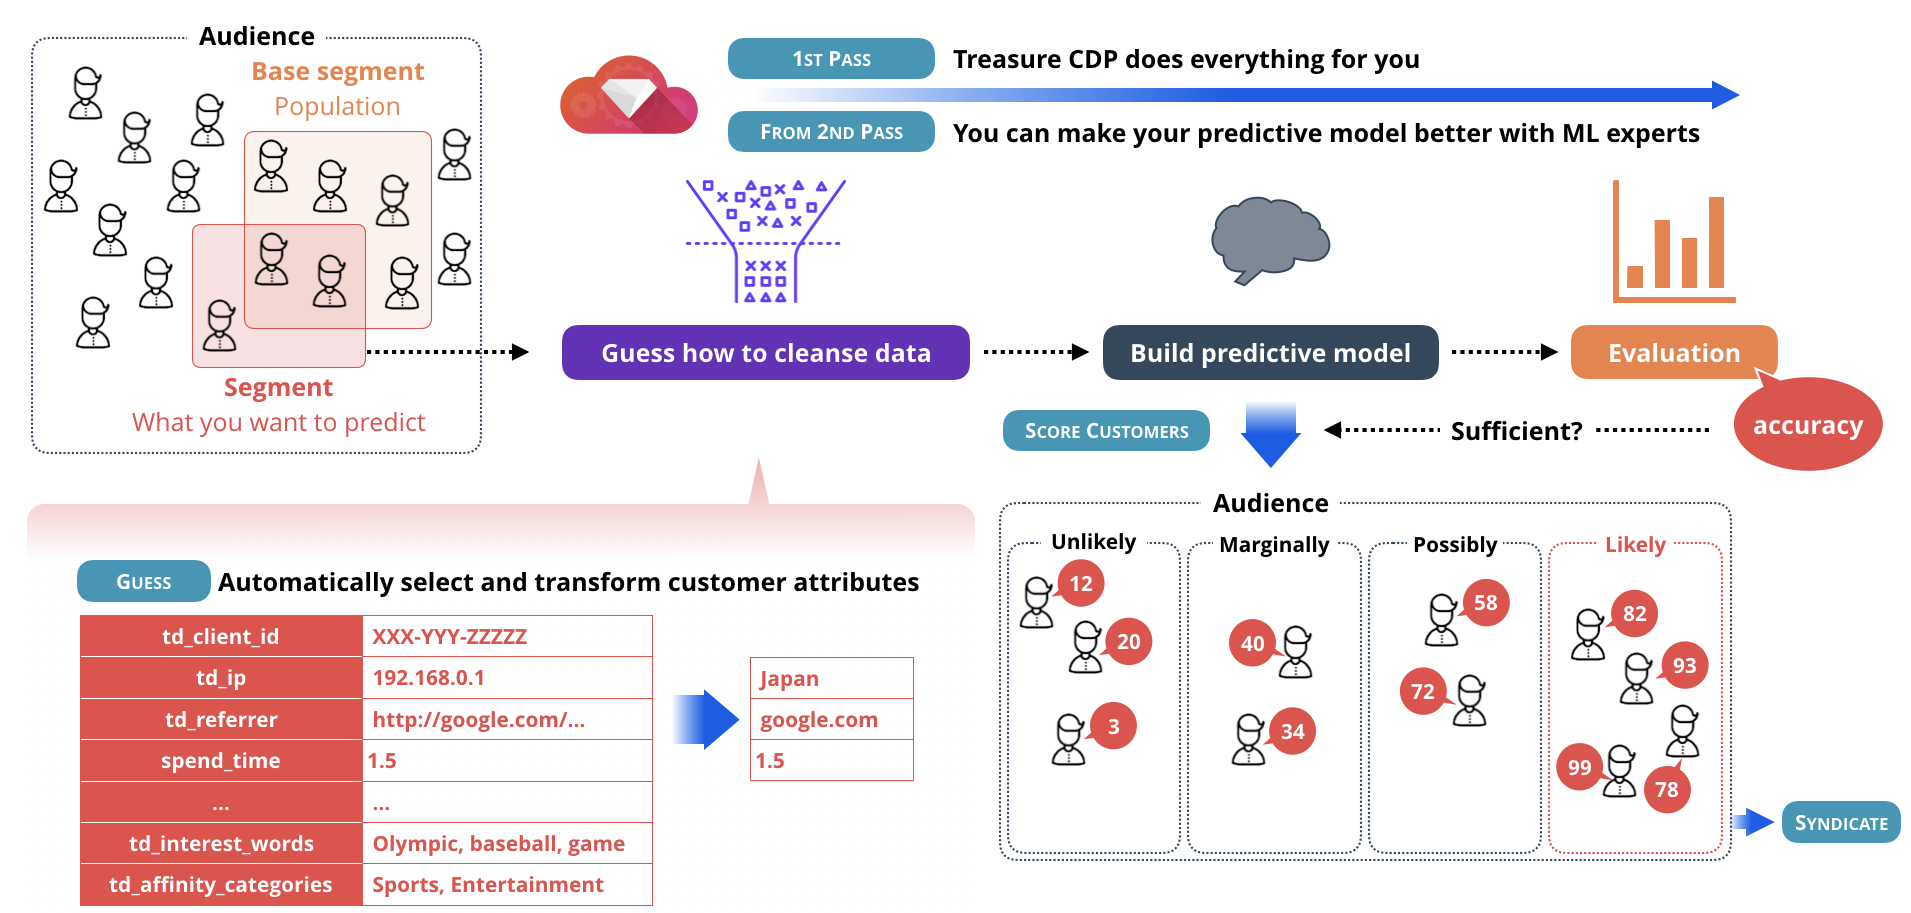 Graphic depicting Treasure Data’s simplified model for predicting customer behavior